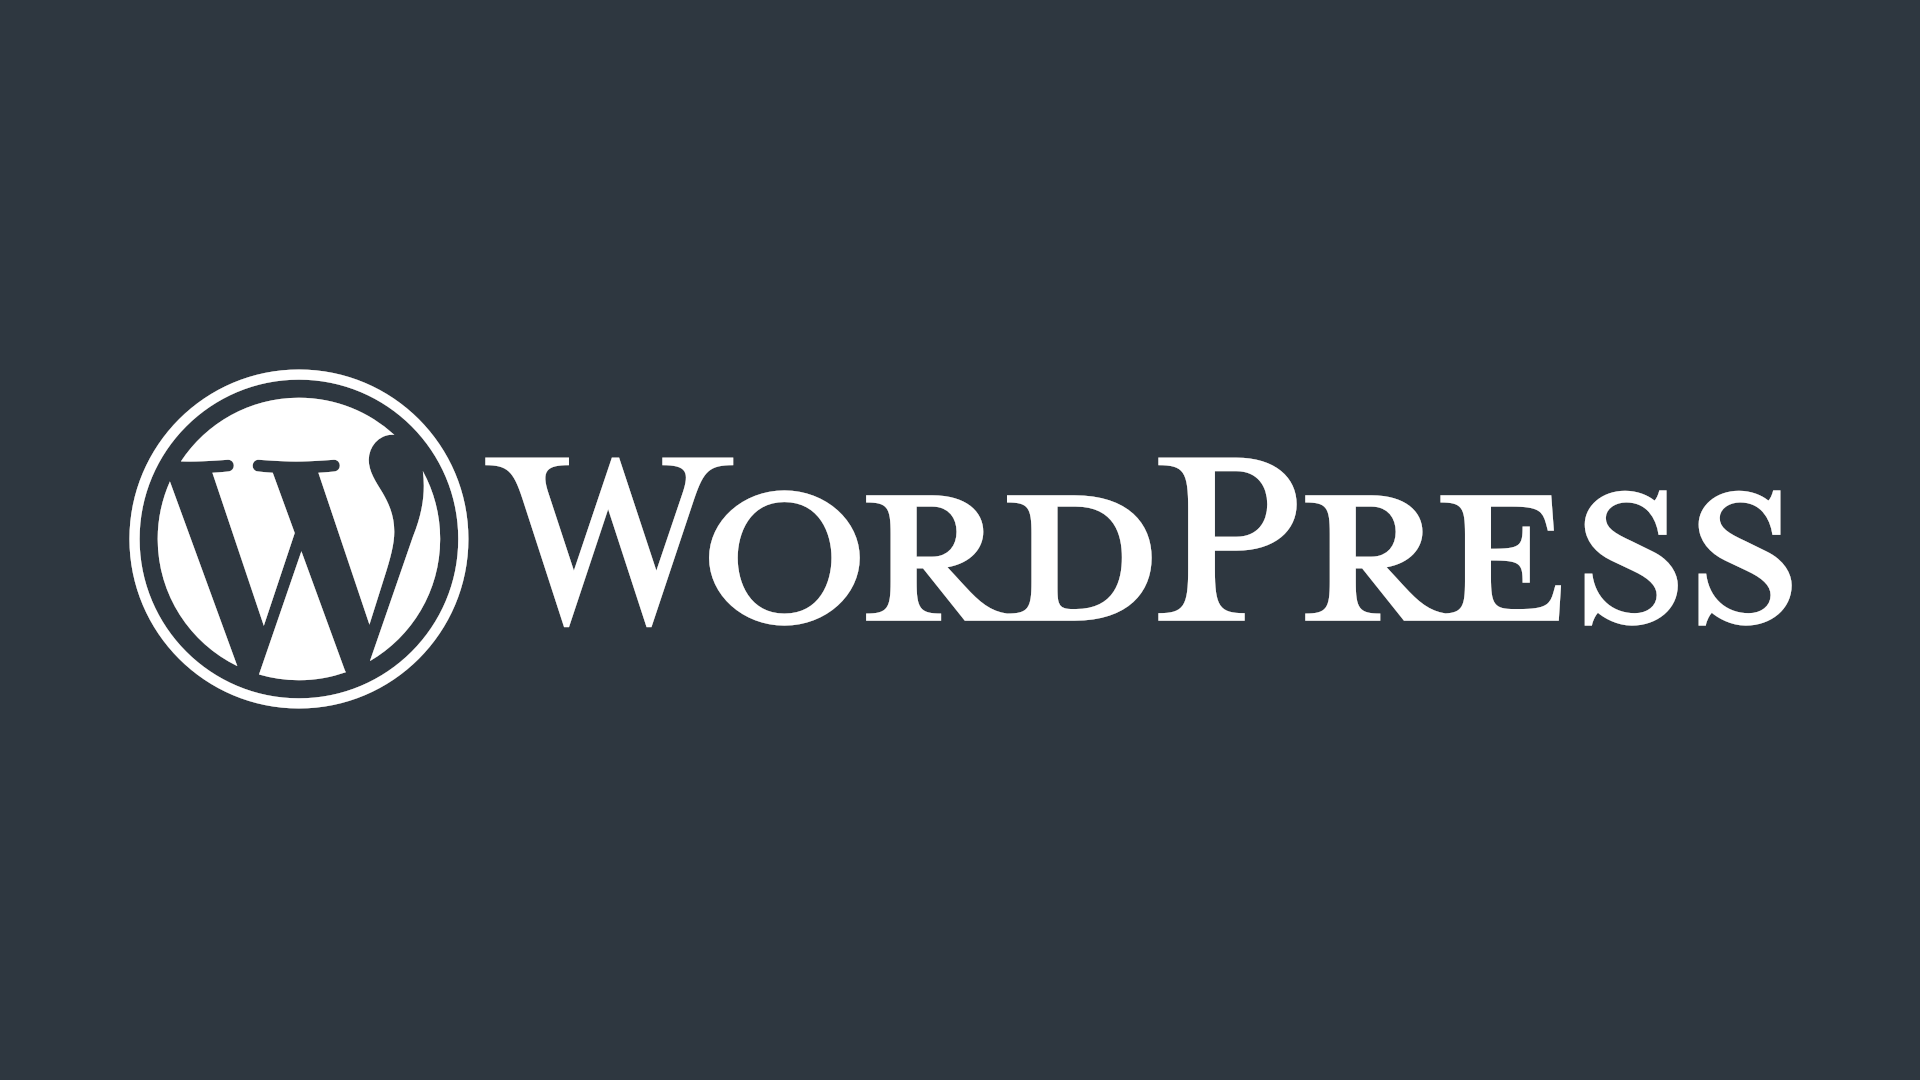 WordPress 6.1 RC2 • 6.1 Sneak Peek with Nick Diego • WP-CLI 2.7.1 • Help Test Plugin Dependencies Feature Plugin